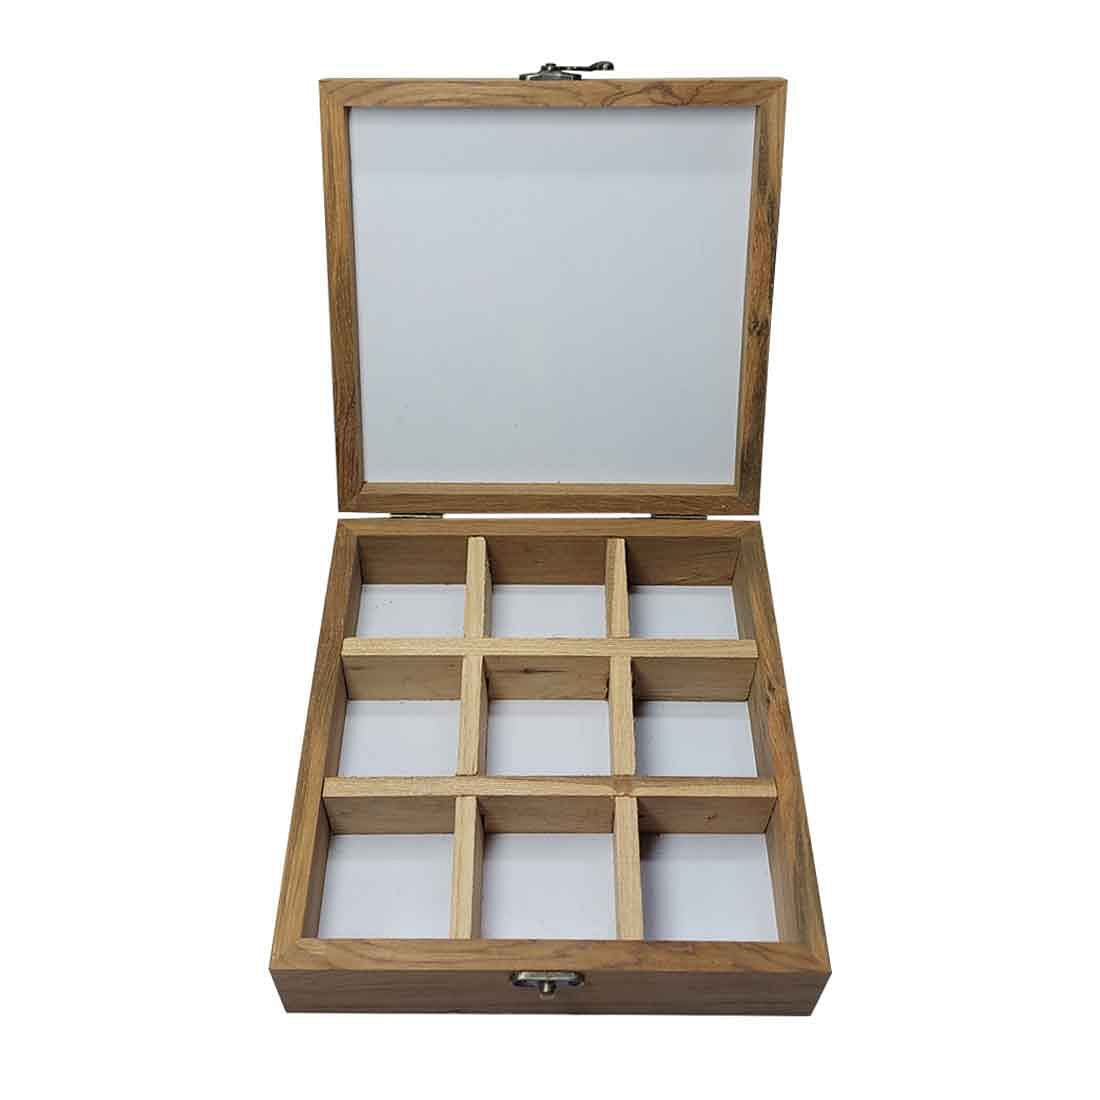 Customized Jewelry Storage Box Organizer for Women - Multicolor Ink Watercolor Nutcase